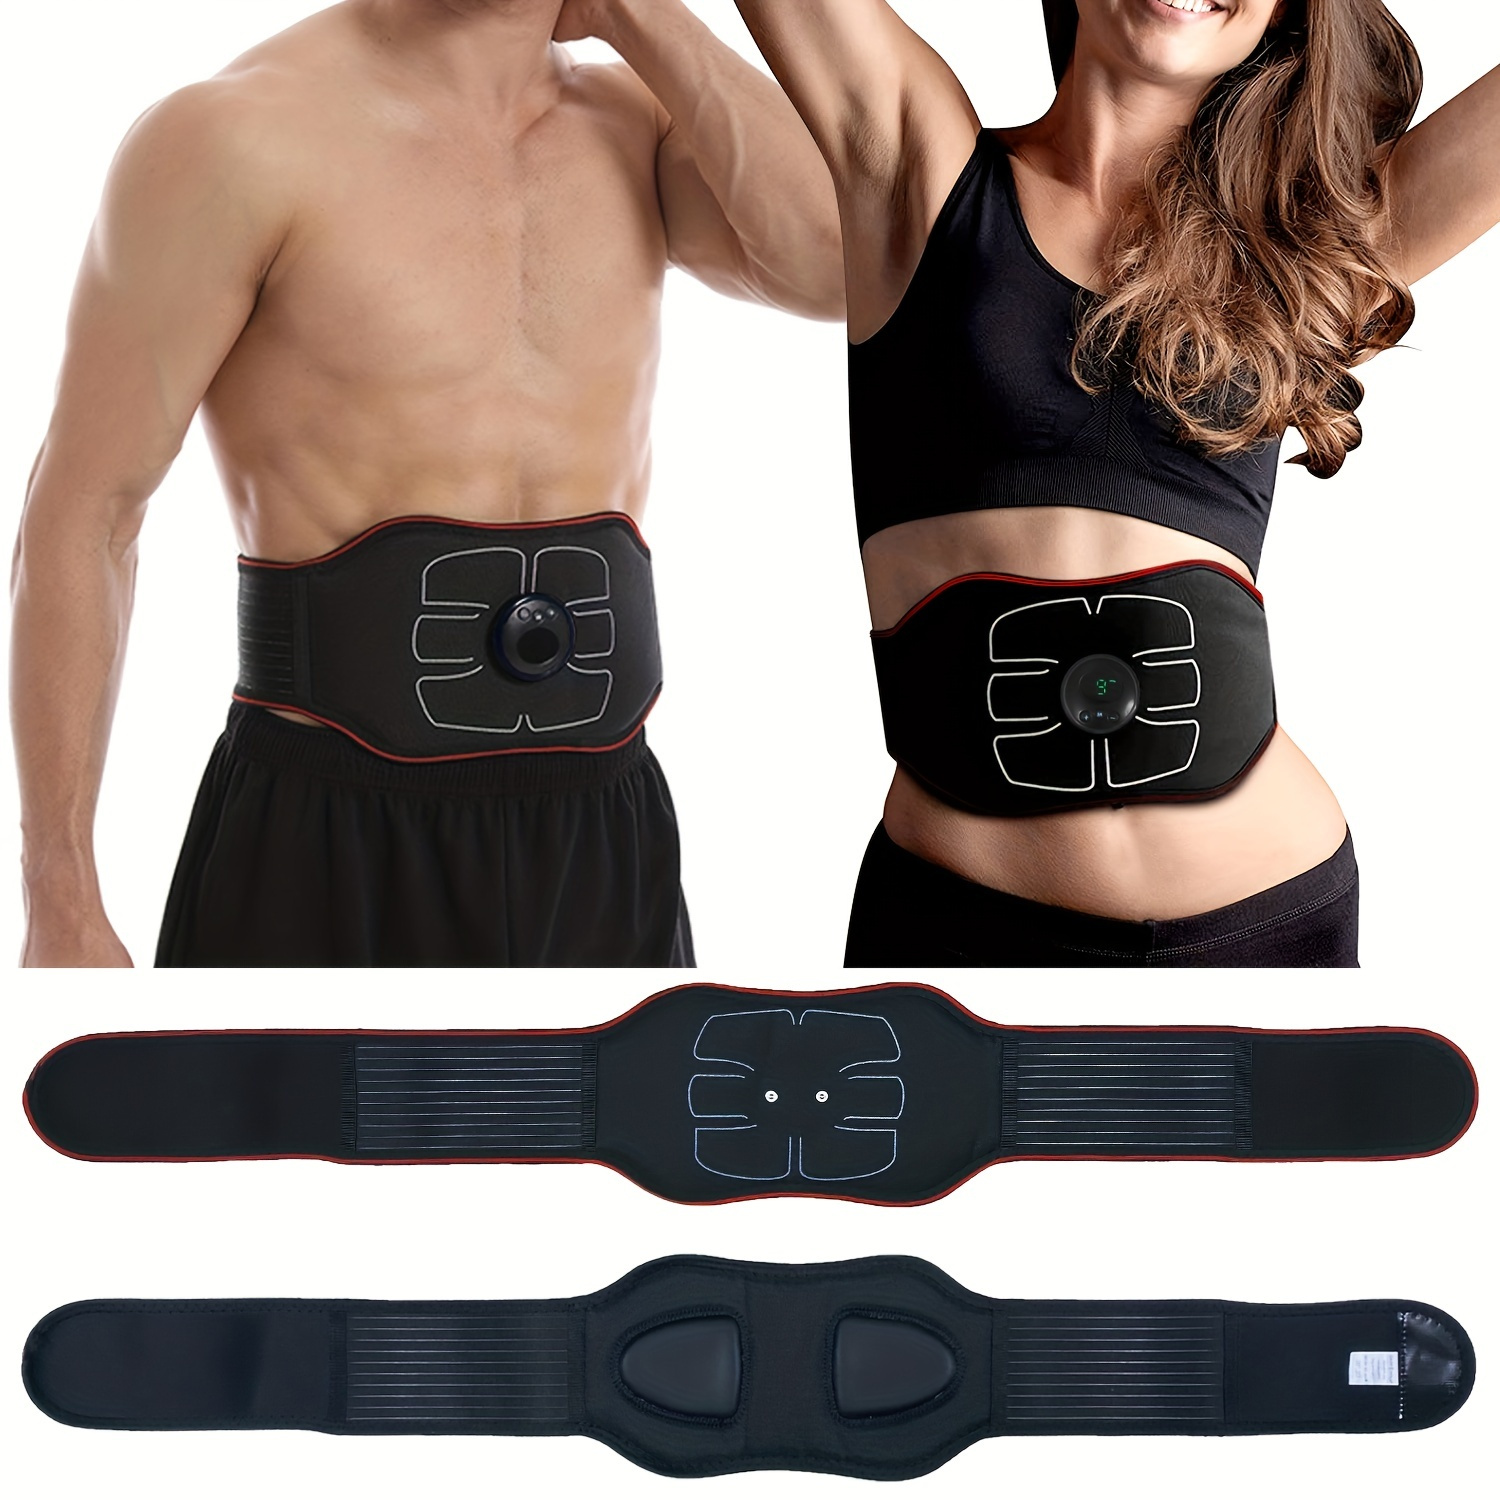 Massage Belt - Electric Warm Palace Belt, Waist Rechargeable Vibration  Support Body Belt Massager, Suitable for Outdoor Sports and Seniors,XL